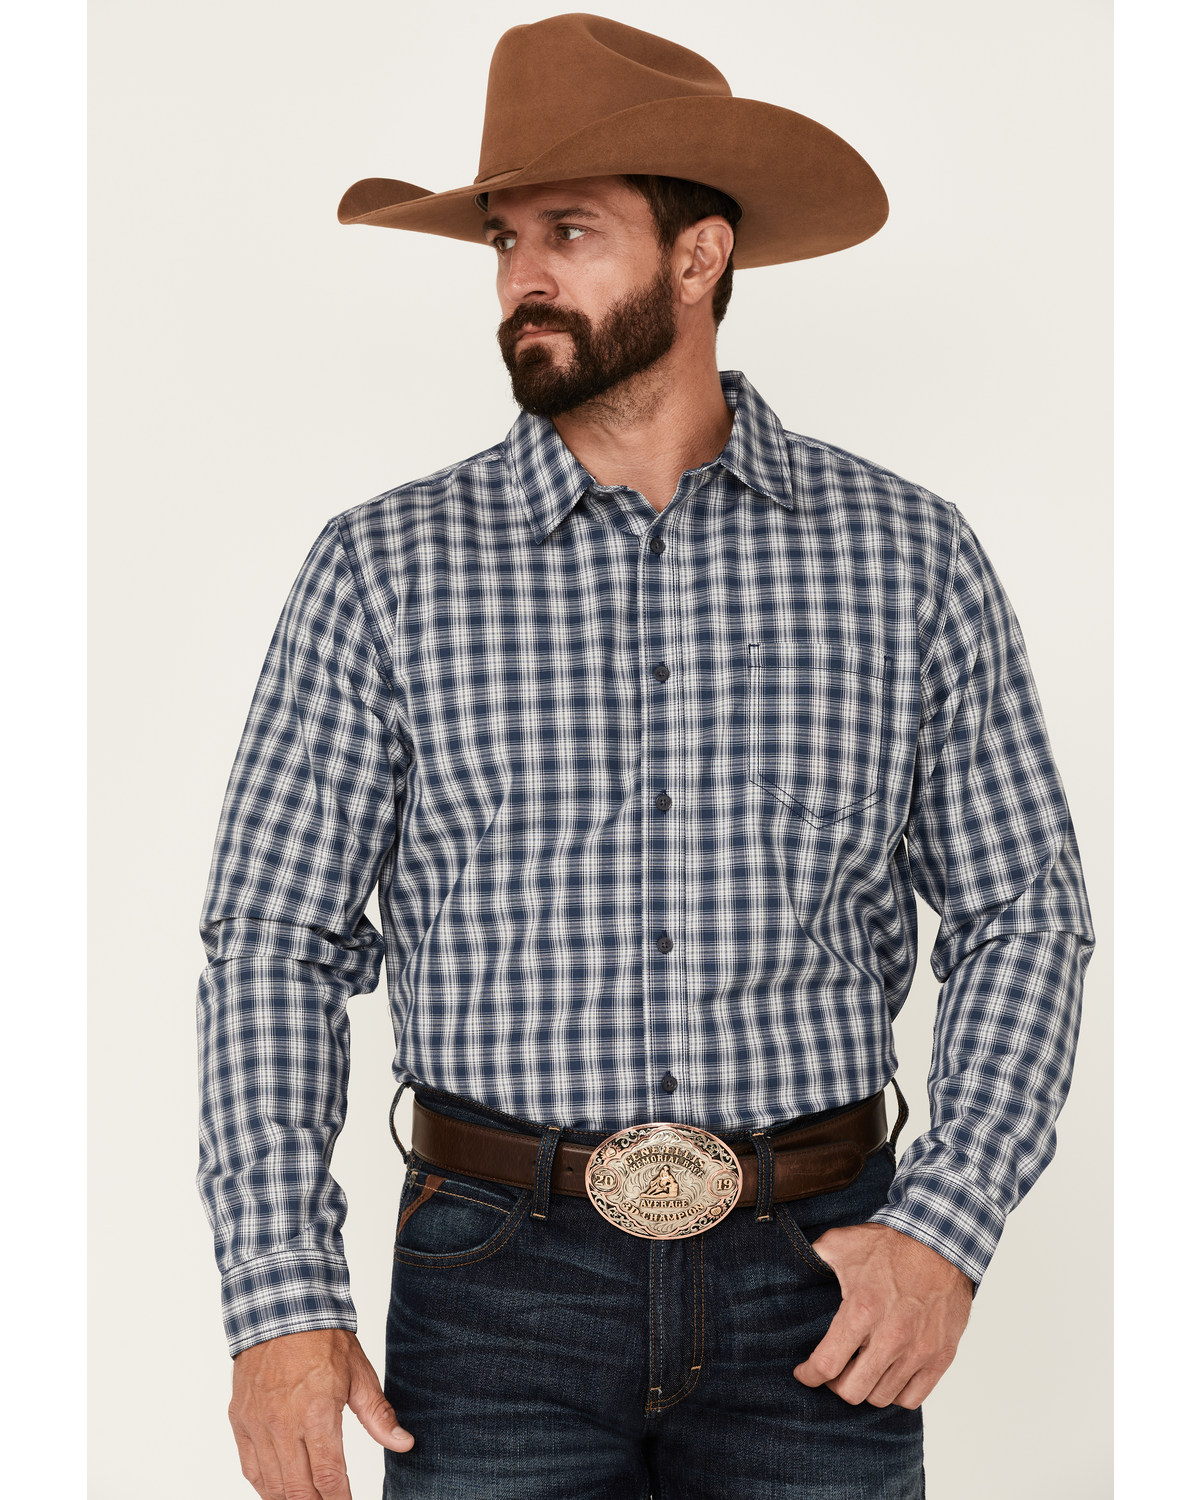 Gibson Men's Simplify Plaid Print Long Sleeve Button Down Western Shirt